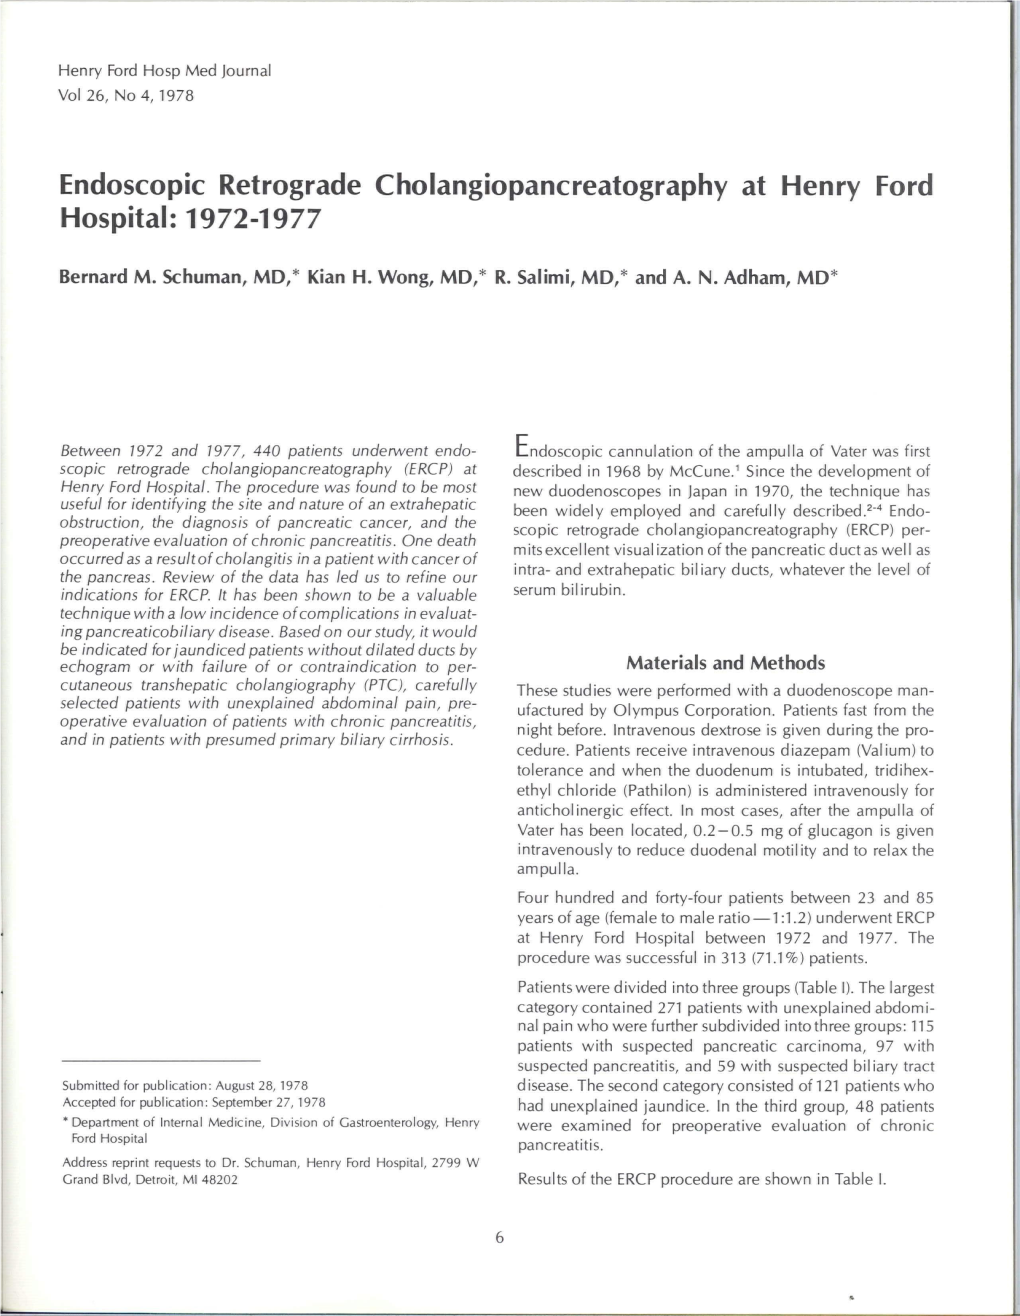 Endoscopic Retrograde Cholangiopancreatography at Henry Ford Hospital: 1972-1977